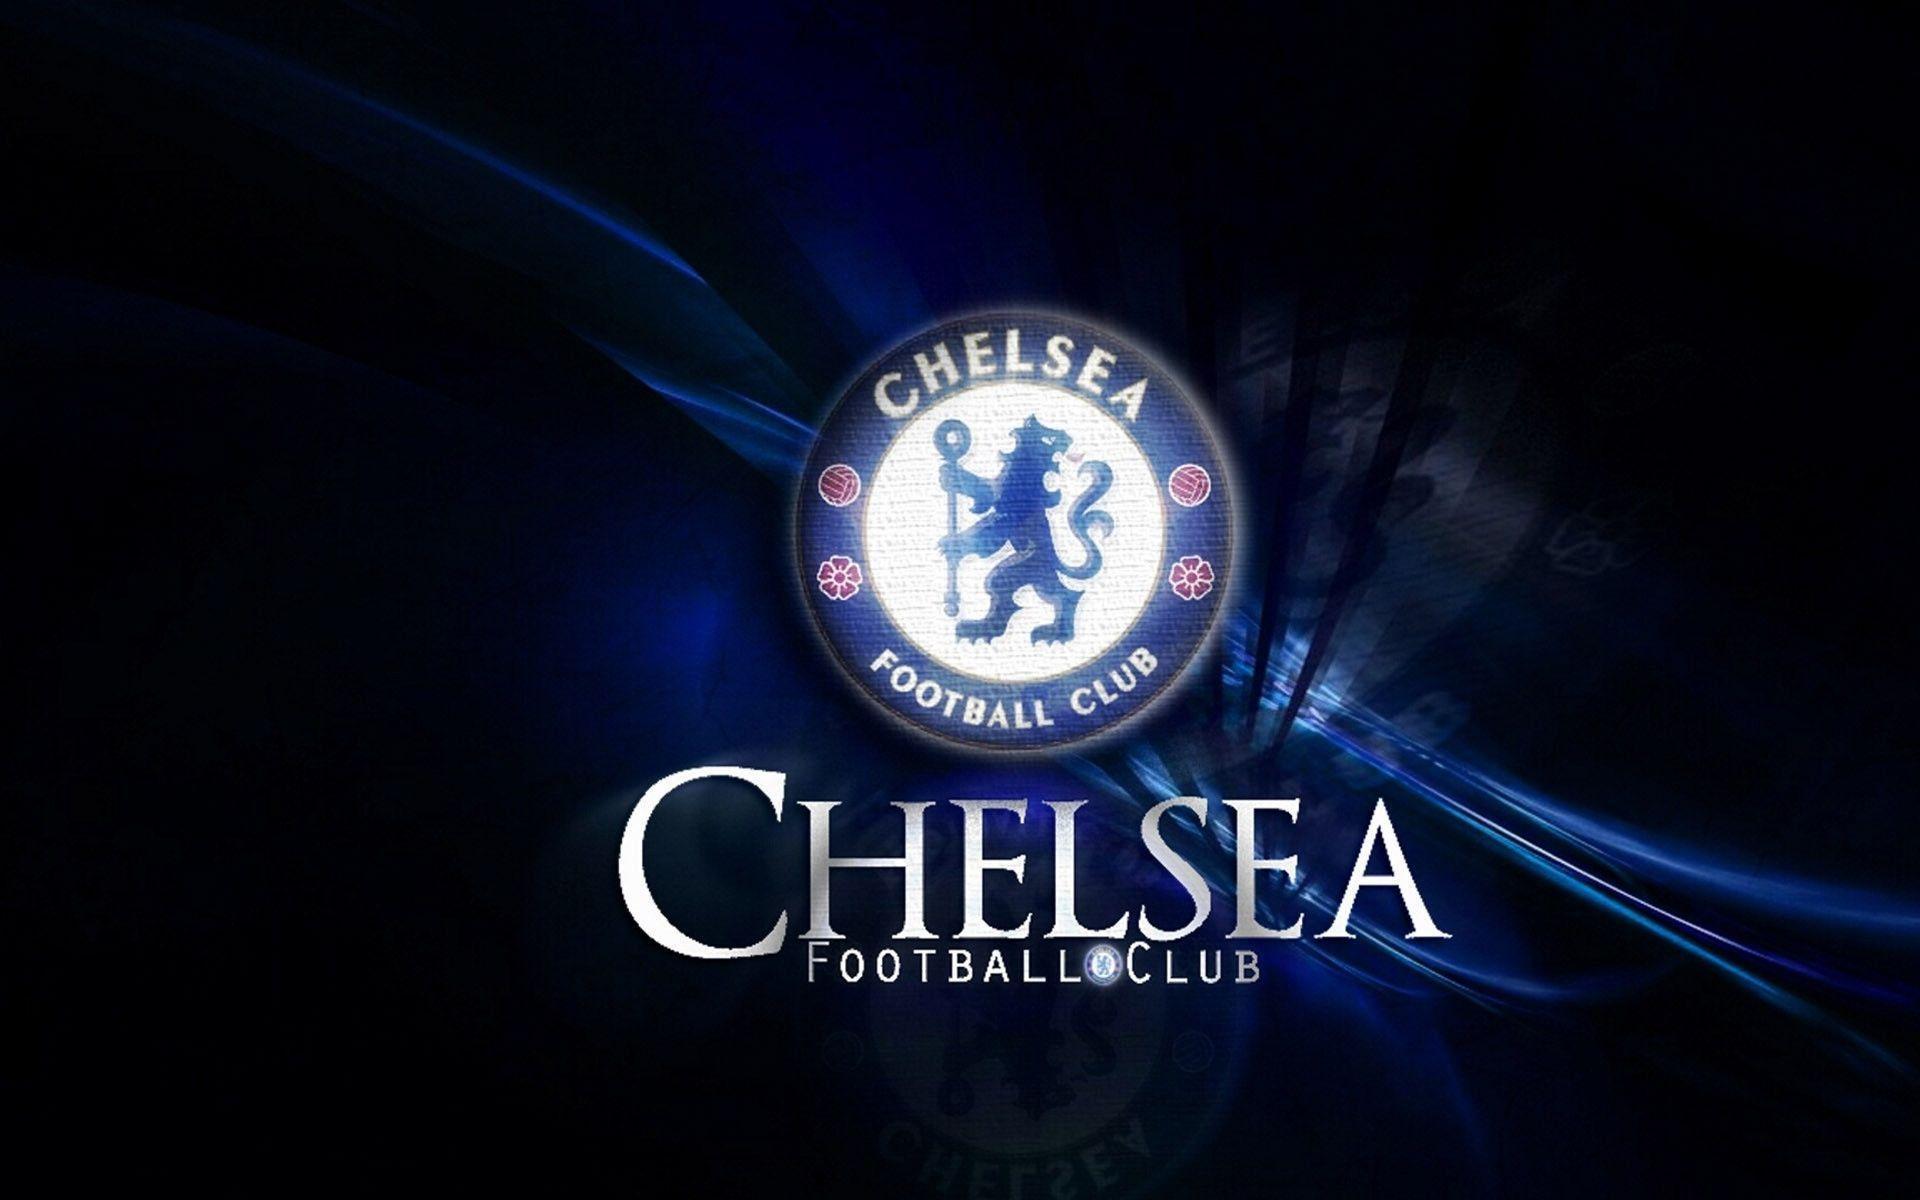 Chelsea Football Club (id: 23999)